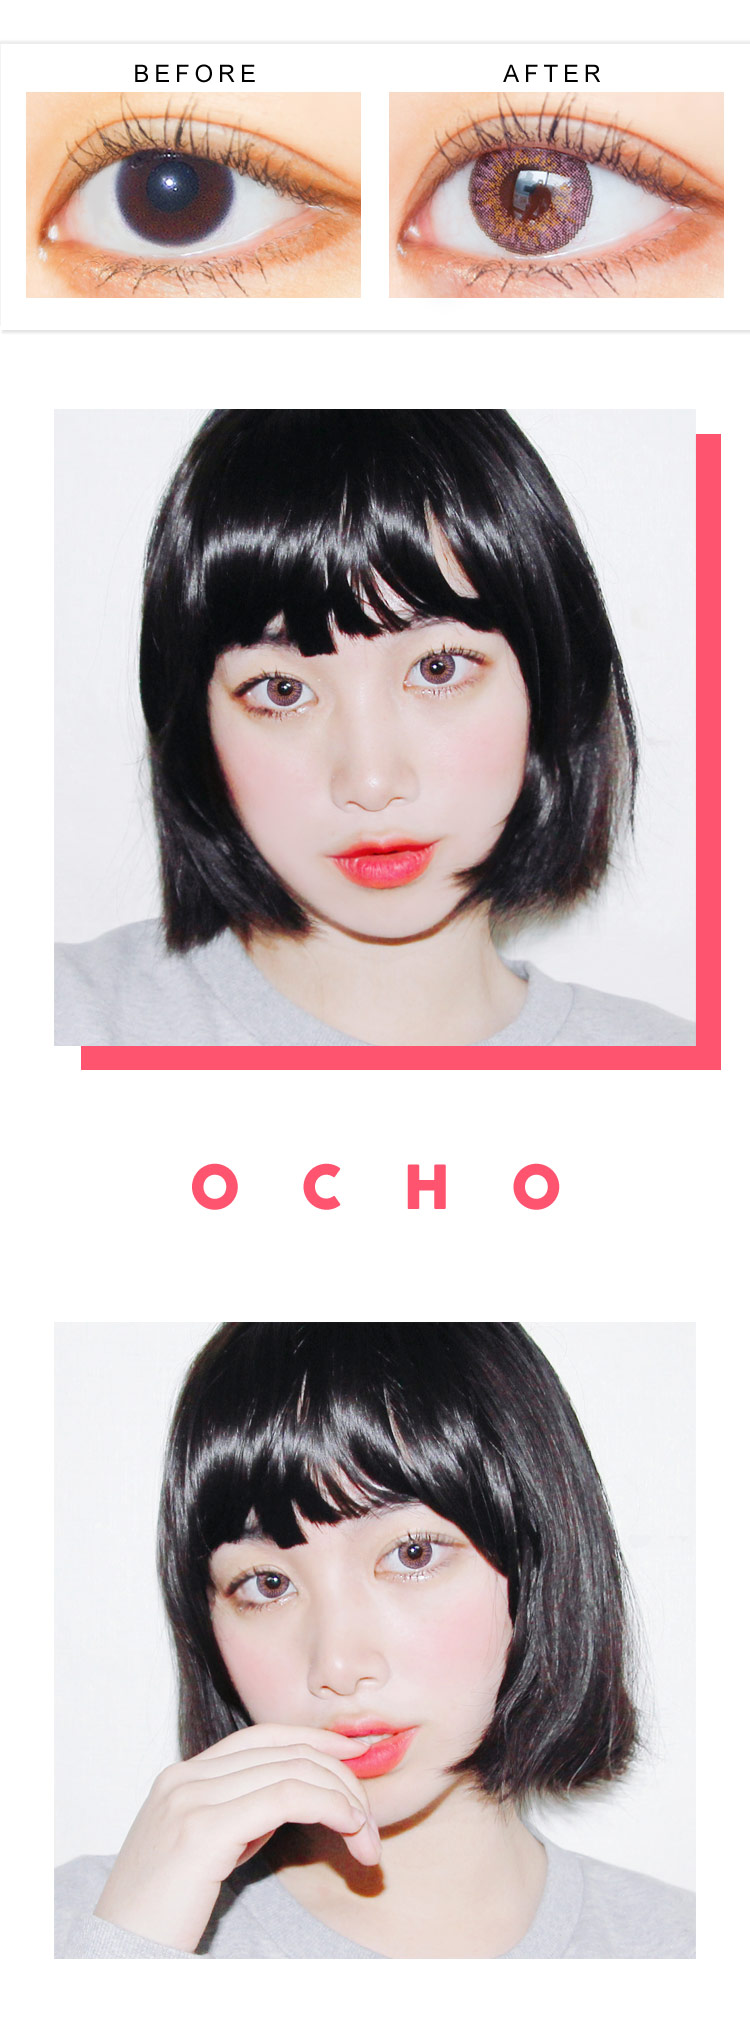 CNC / OCHO PINK